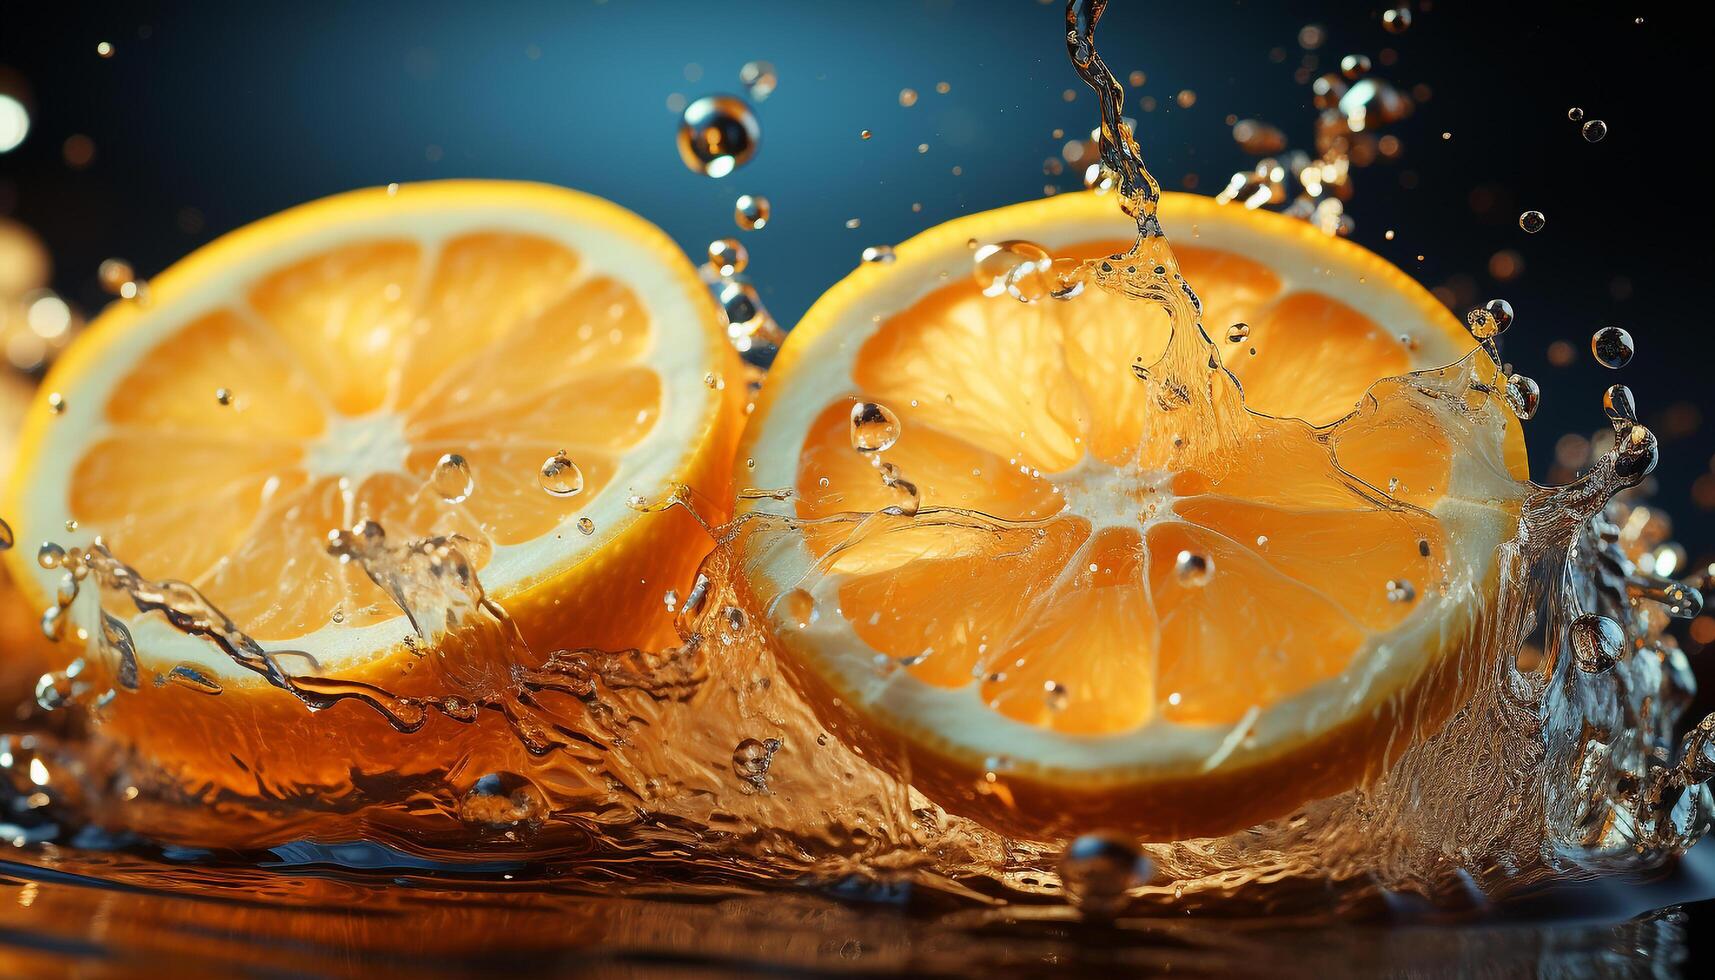 AI generated Freshness drops, lemon slice, wet citrus fruit, liquid splash generated by AI photo